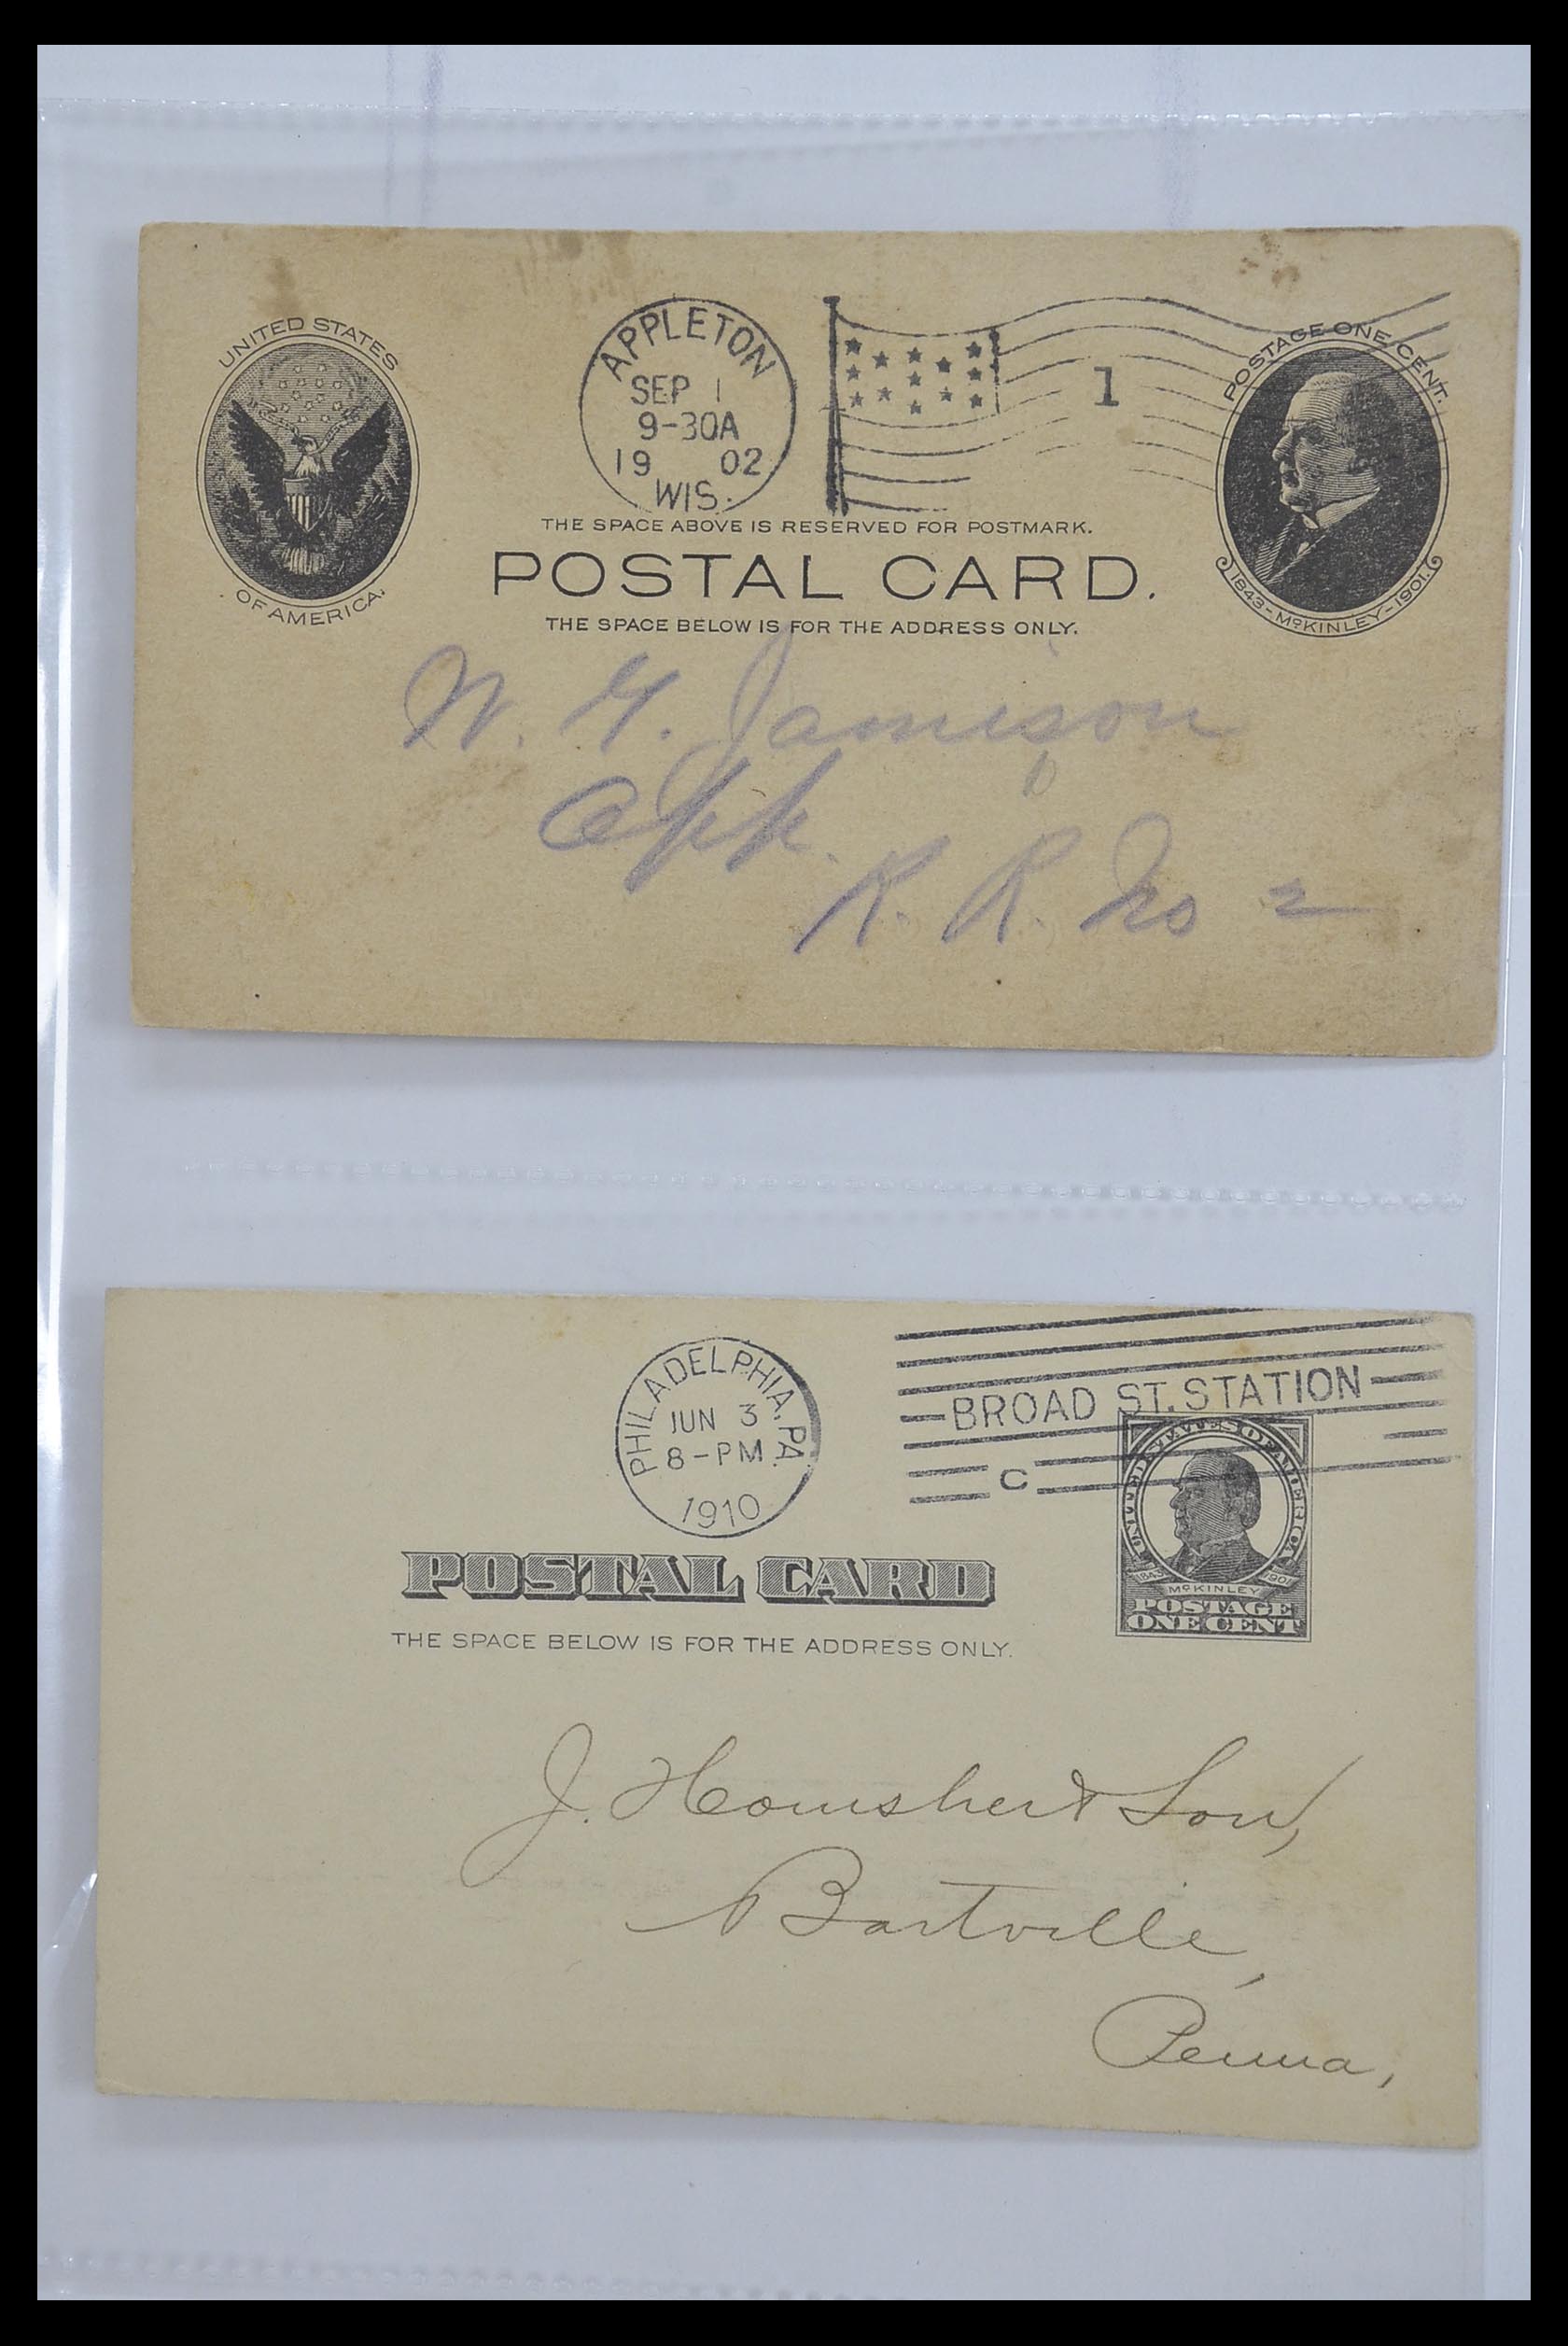 33501 009 - Stamp collection 33501 USA postal cards 1880-1920.